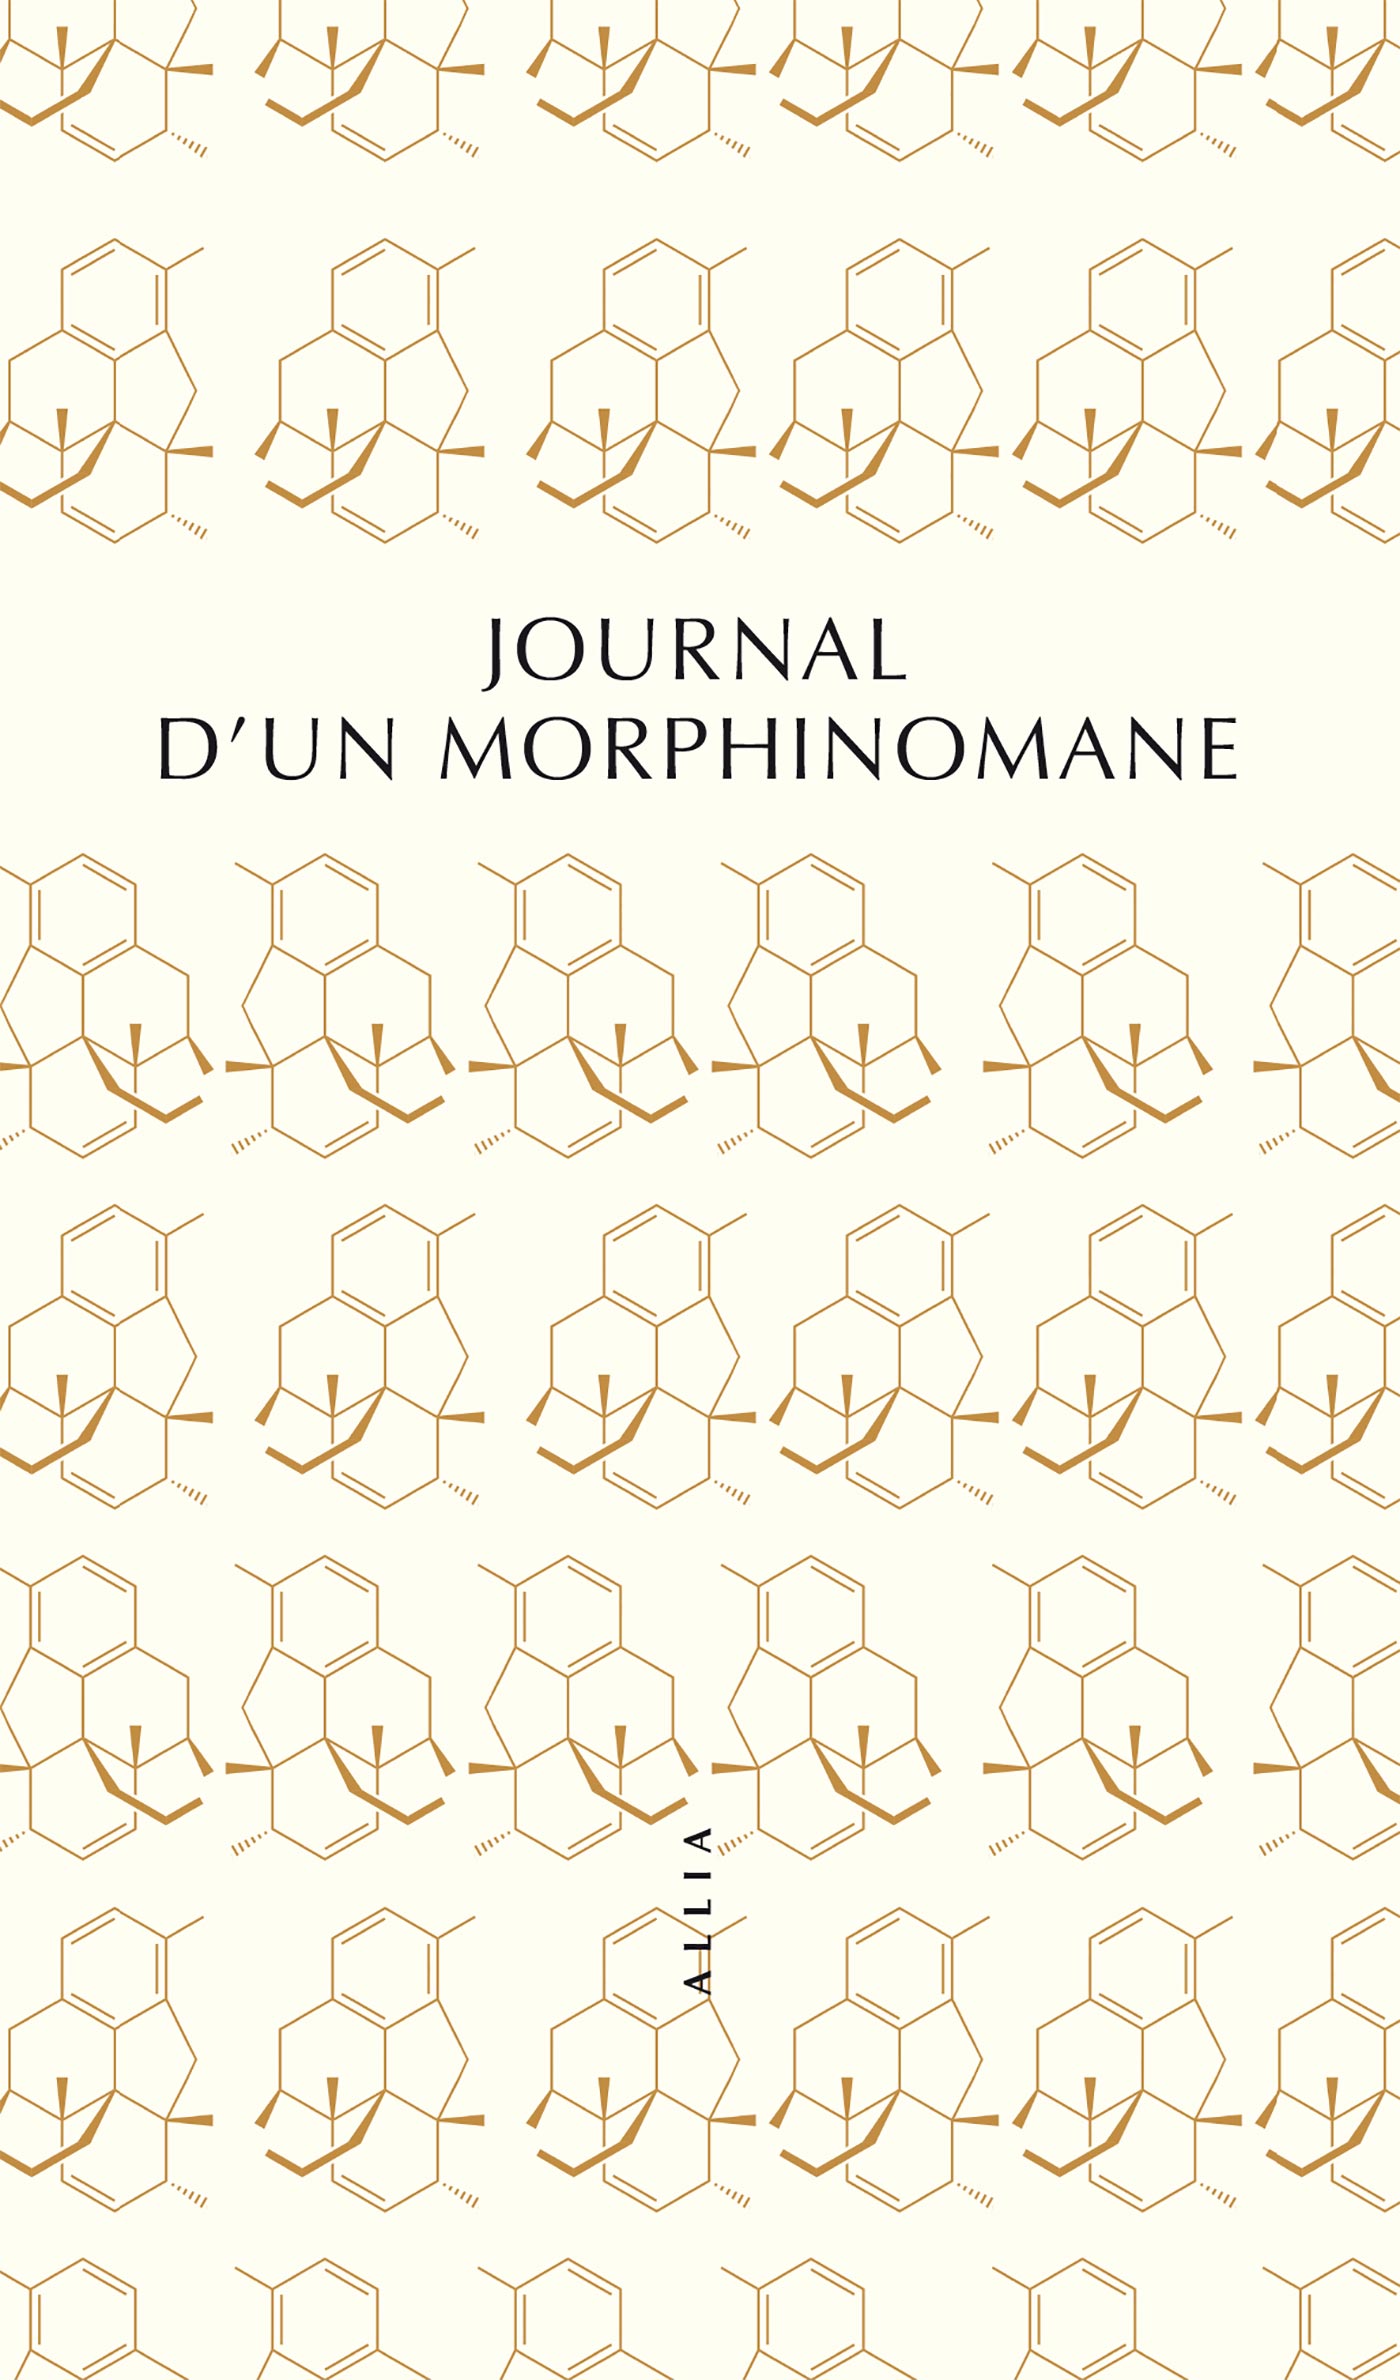 Journal d’un morphinomane